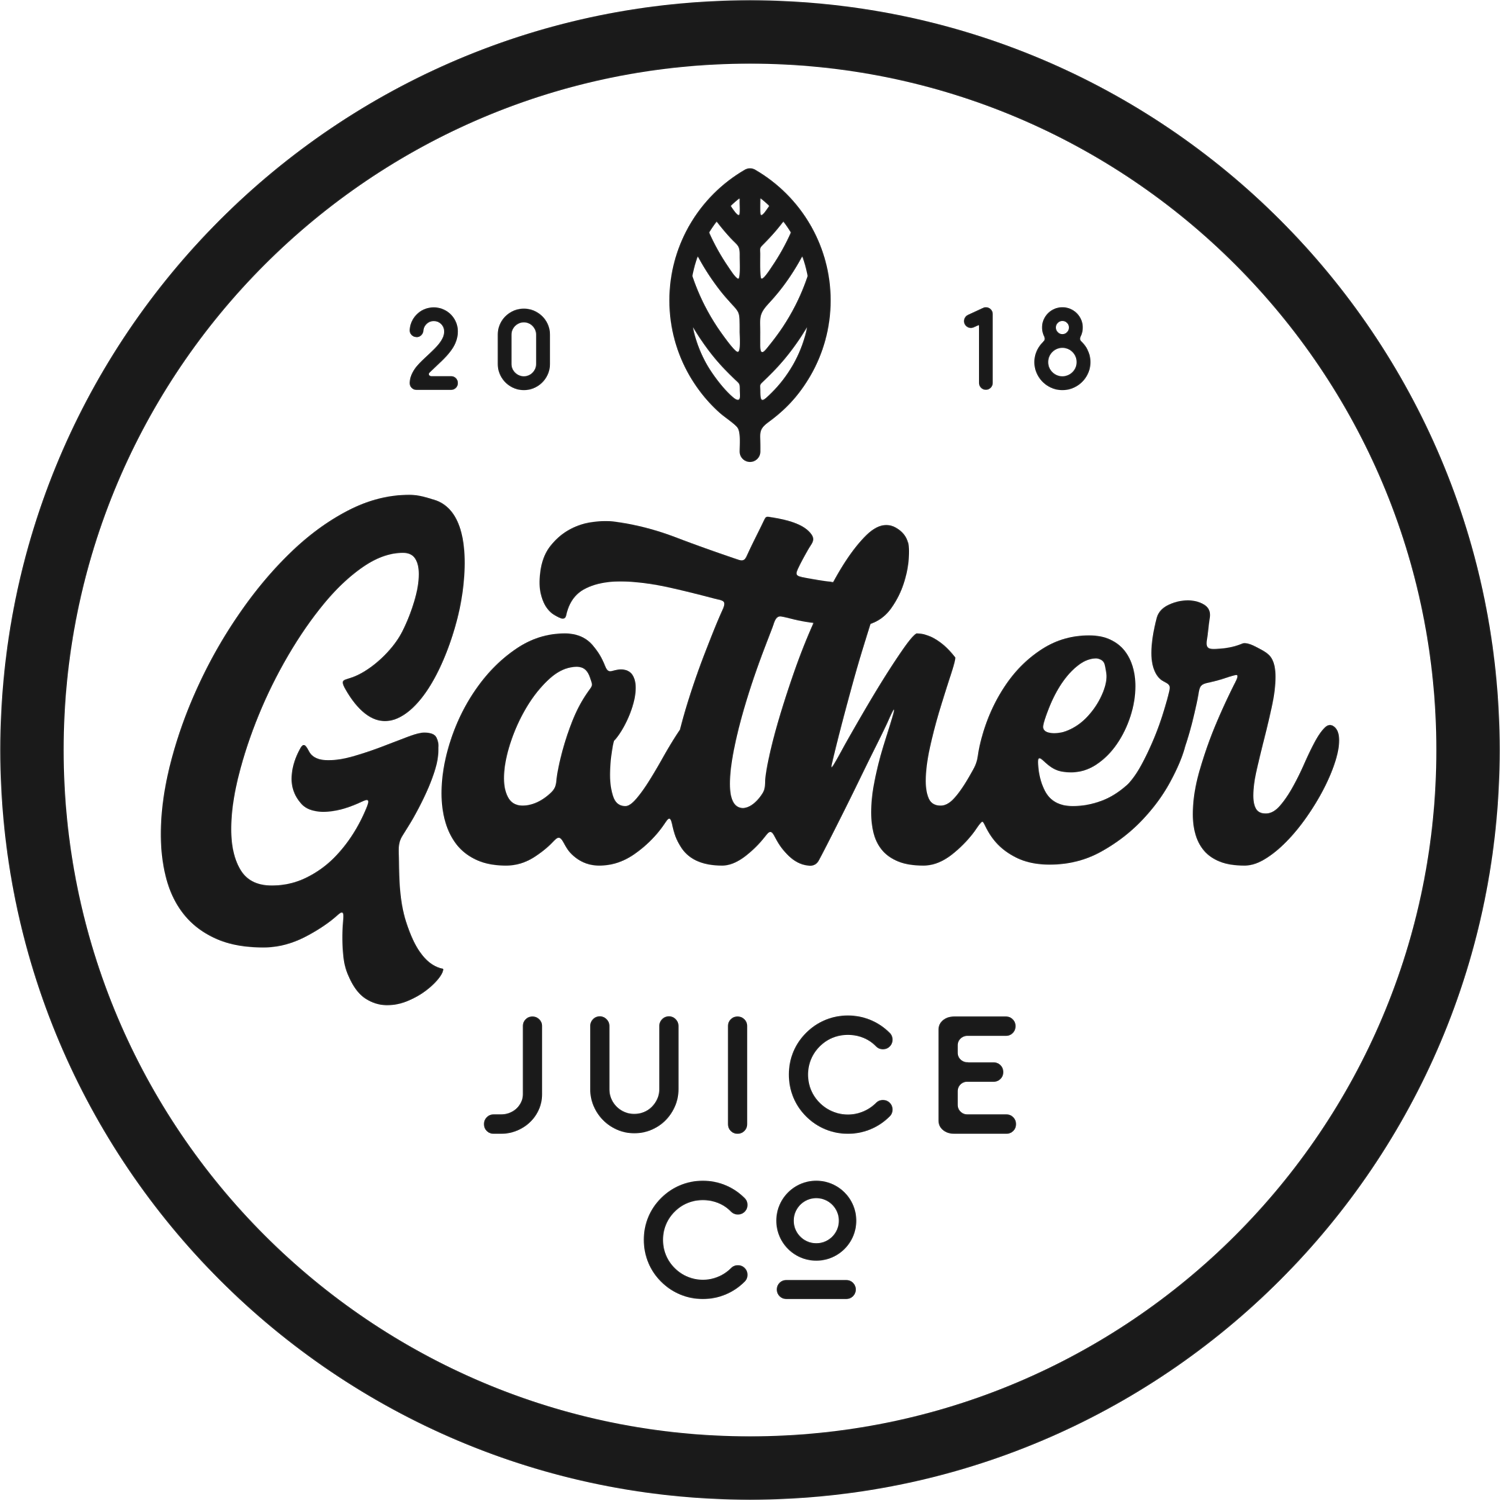 Gather Juice Co.